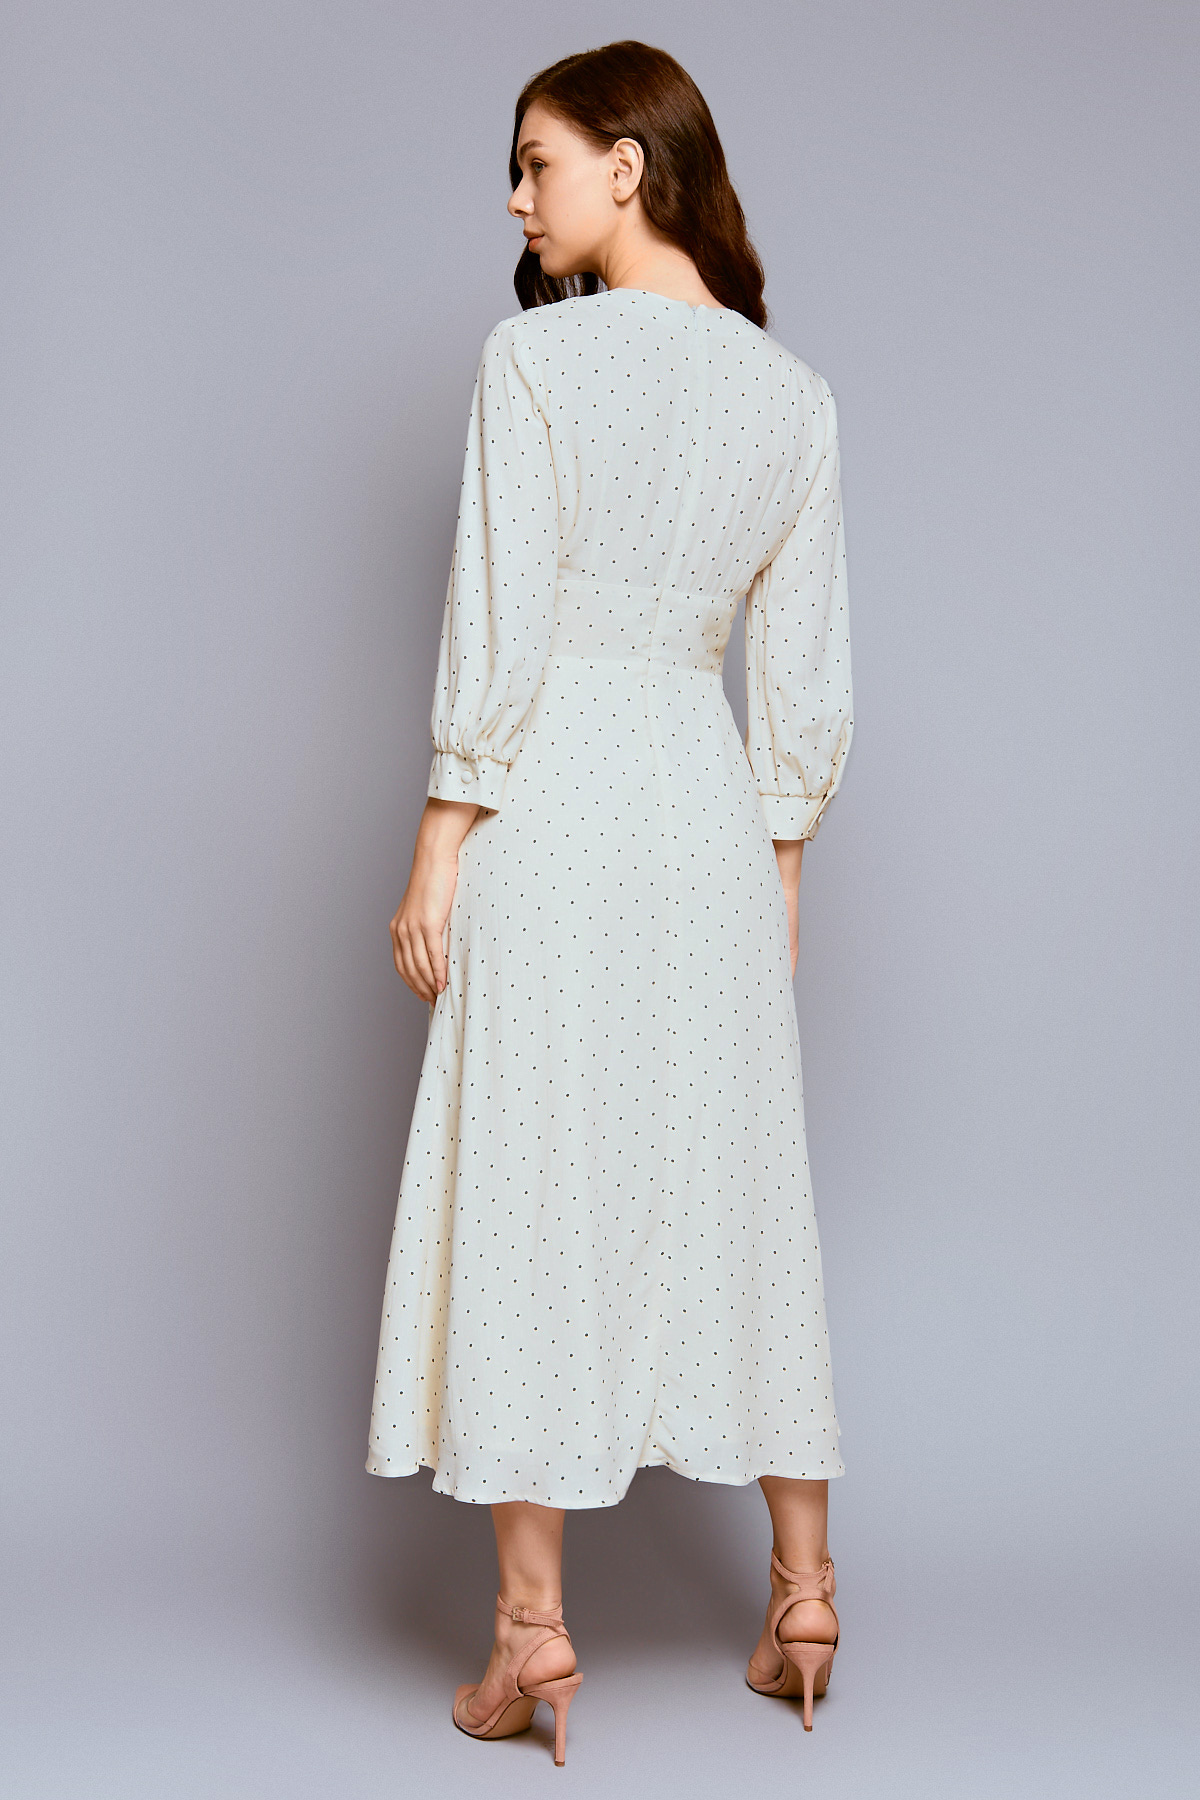 Milky white polka dot midi dress with V-neck and short sleeves, photo 3